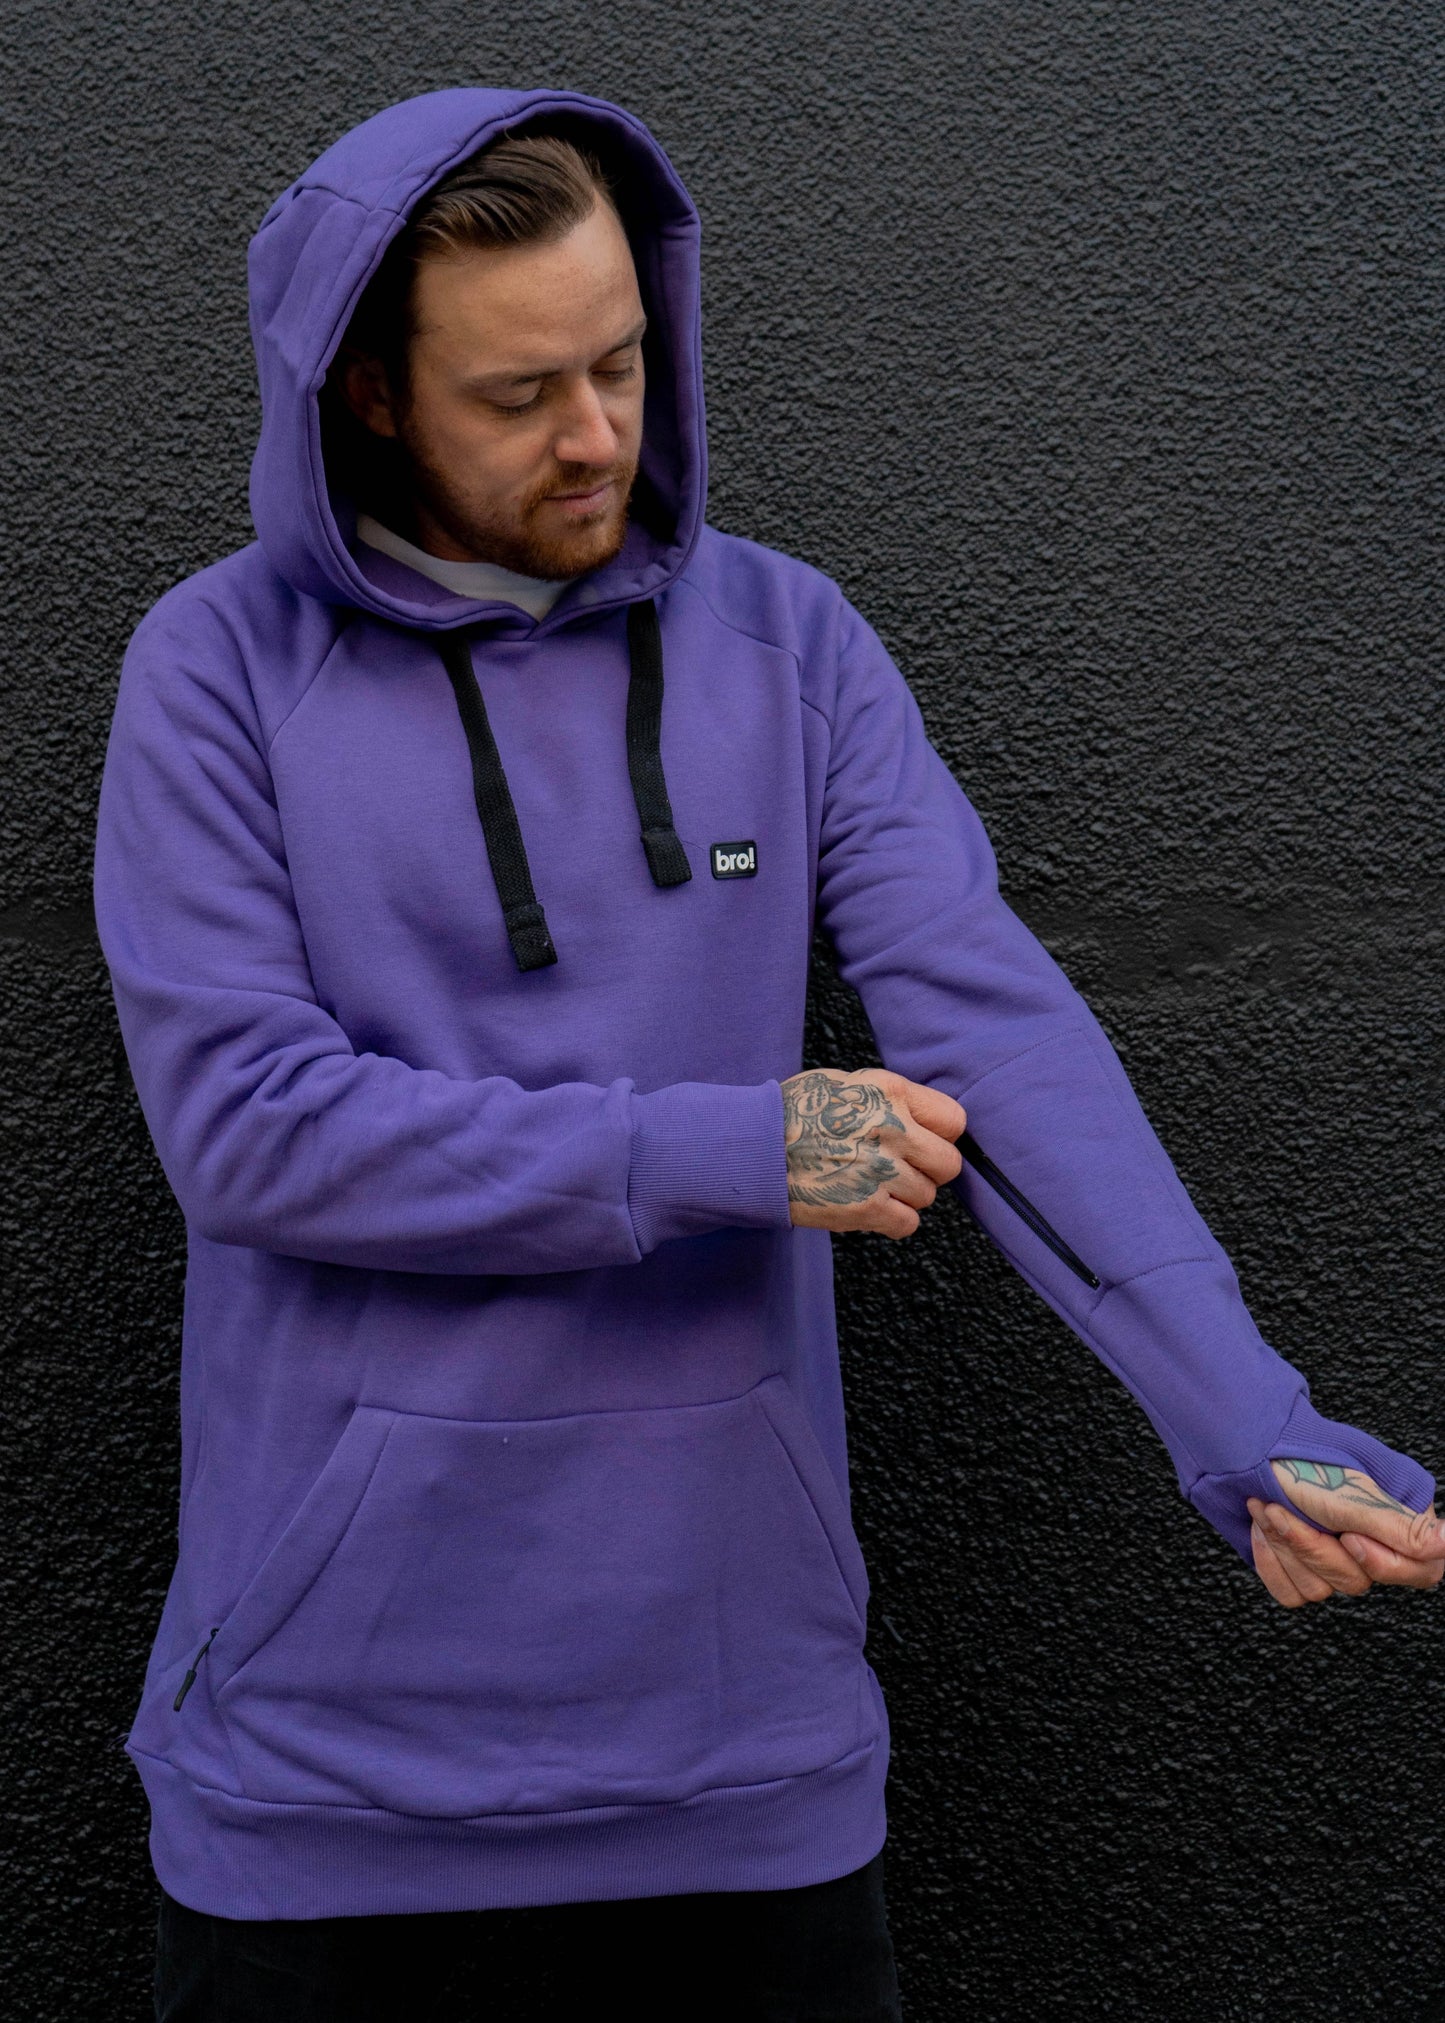 bro! park edition hoodie (purple)